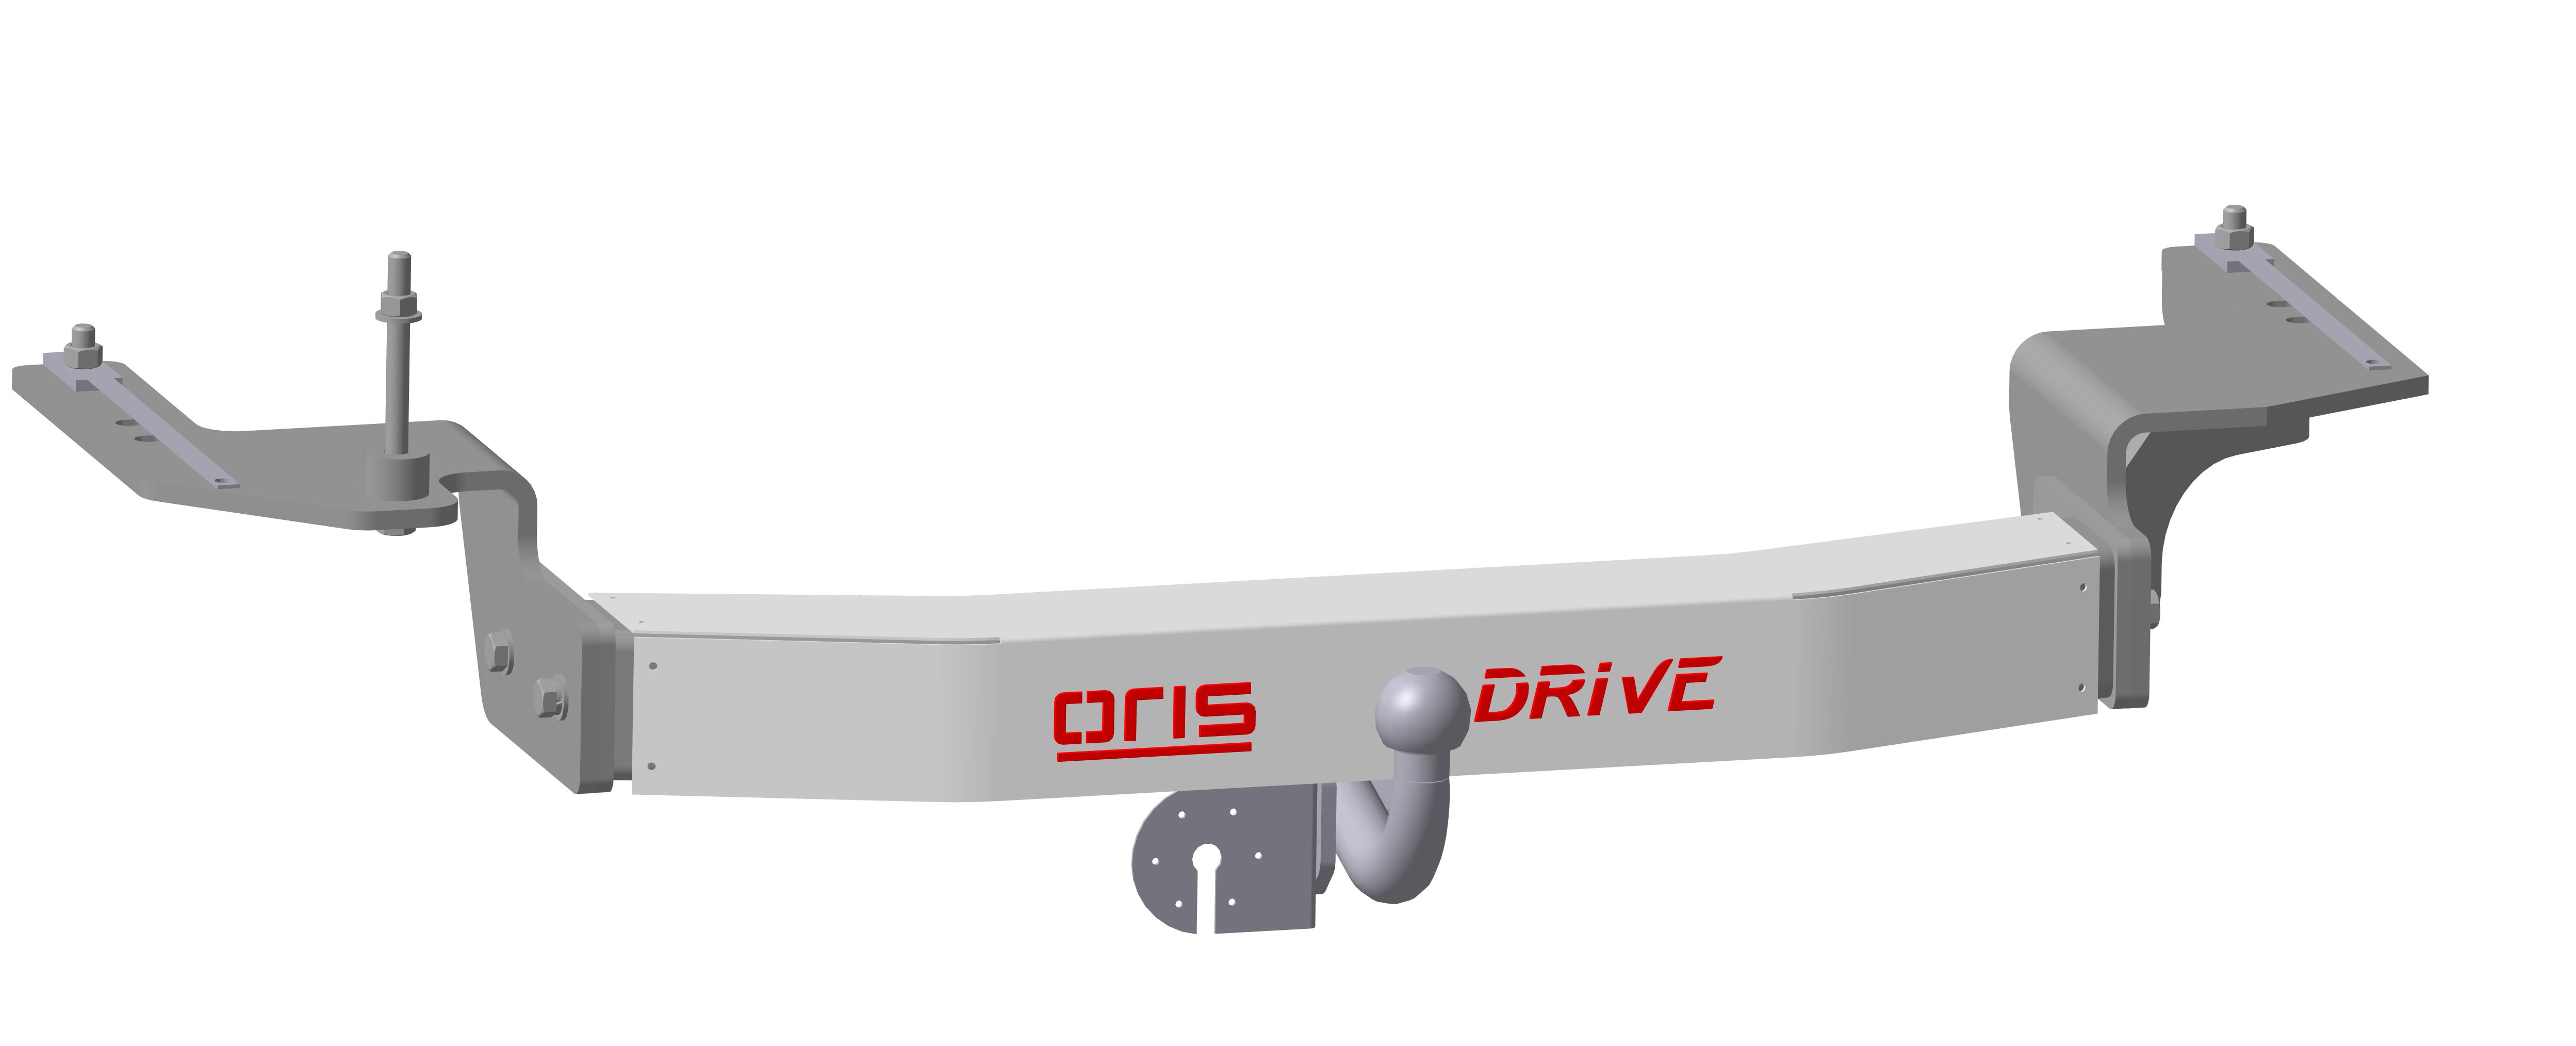 3054-AOD ТСУ со светящейся надписью "ORIS DRIVE" на Toyota Land Cruiser J200, Lexus LX